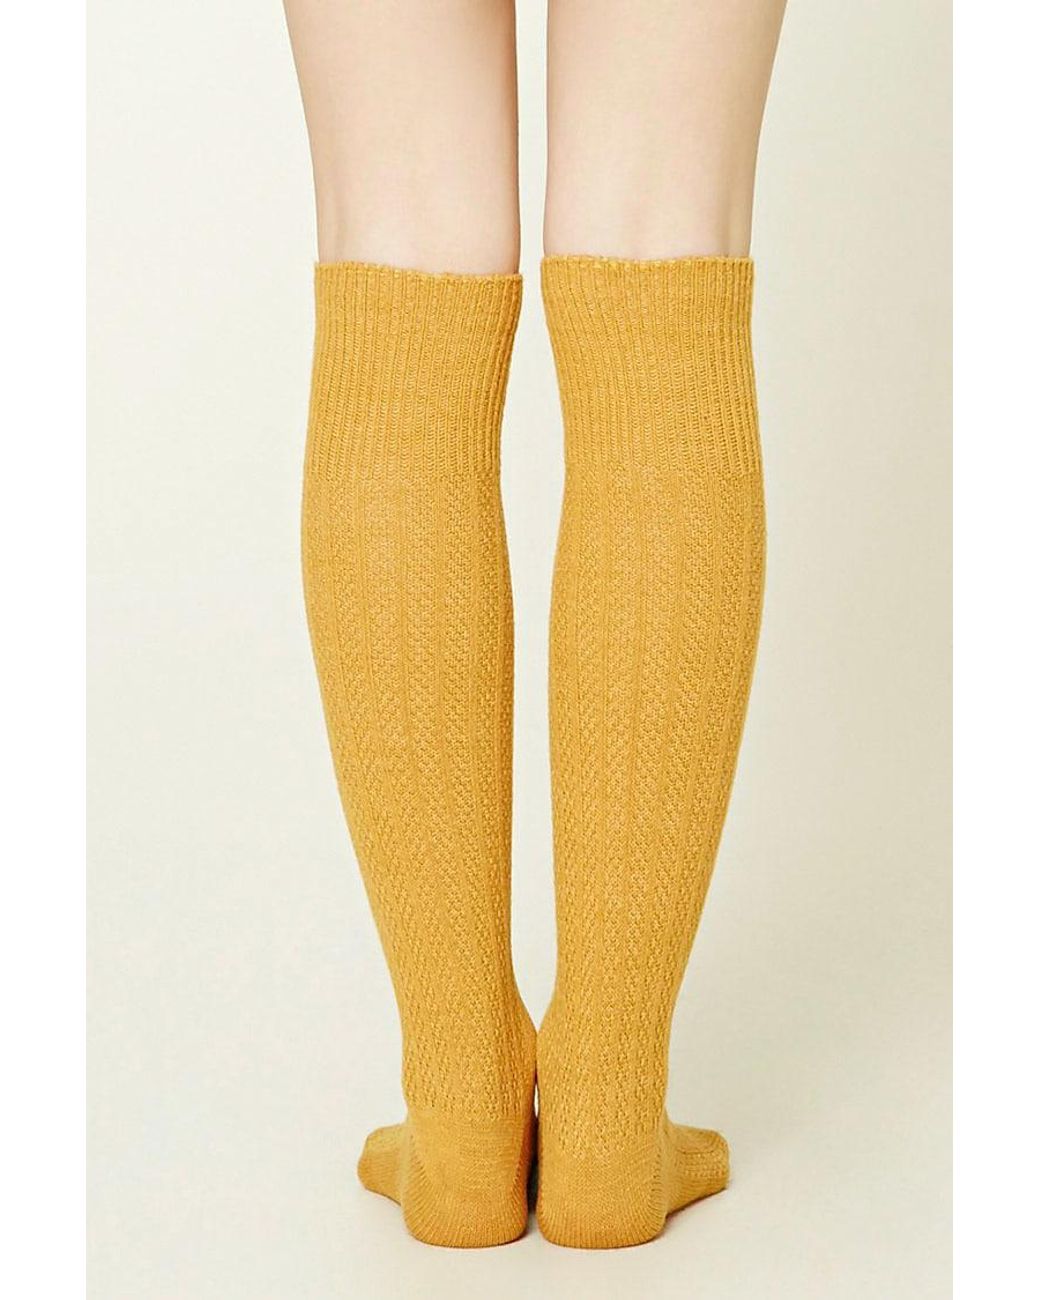 Womens Cotton Knee High Socks Softball Yellow Fashion Socks Women¡¯s Shoe Size 5-9 